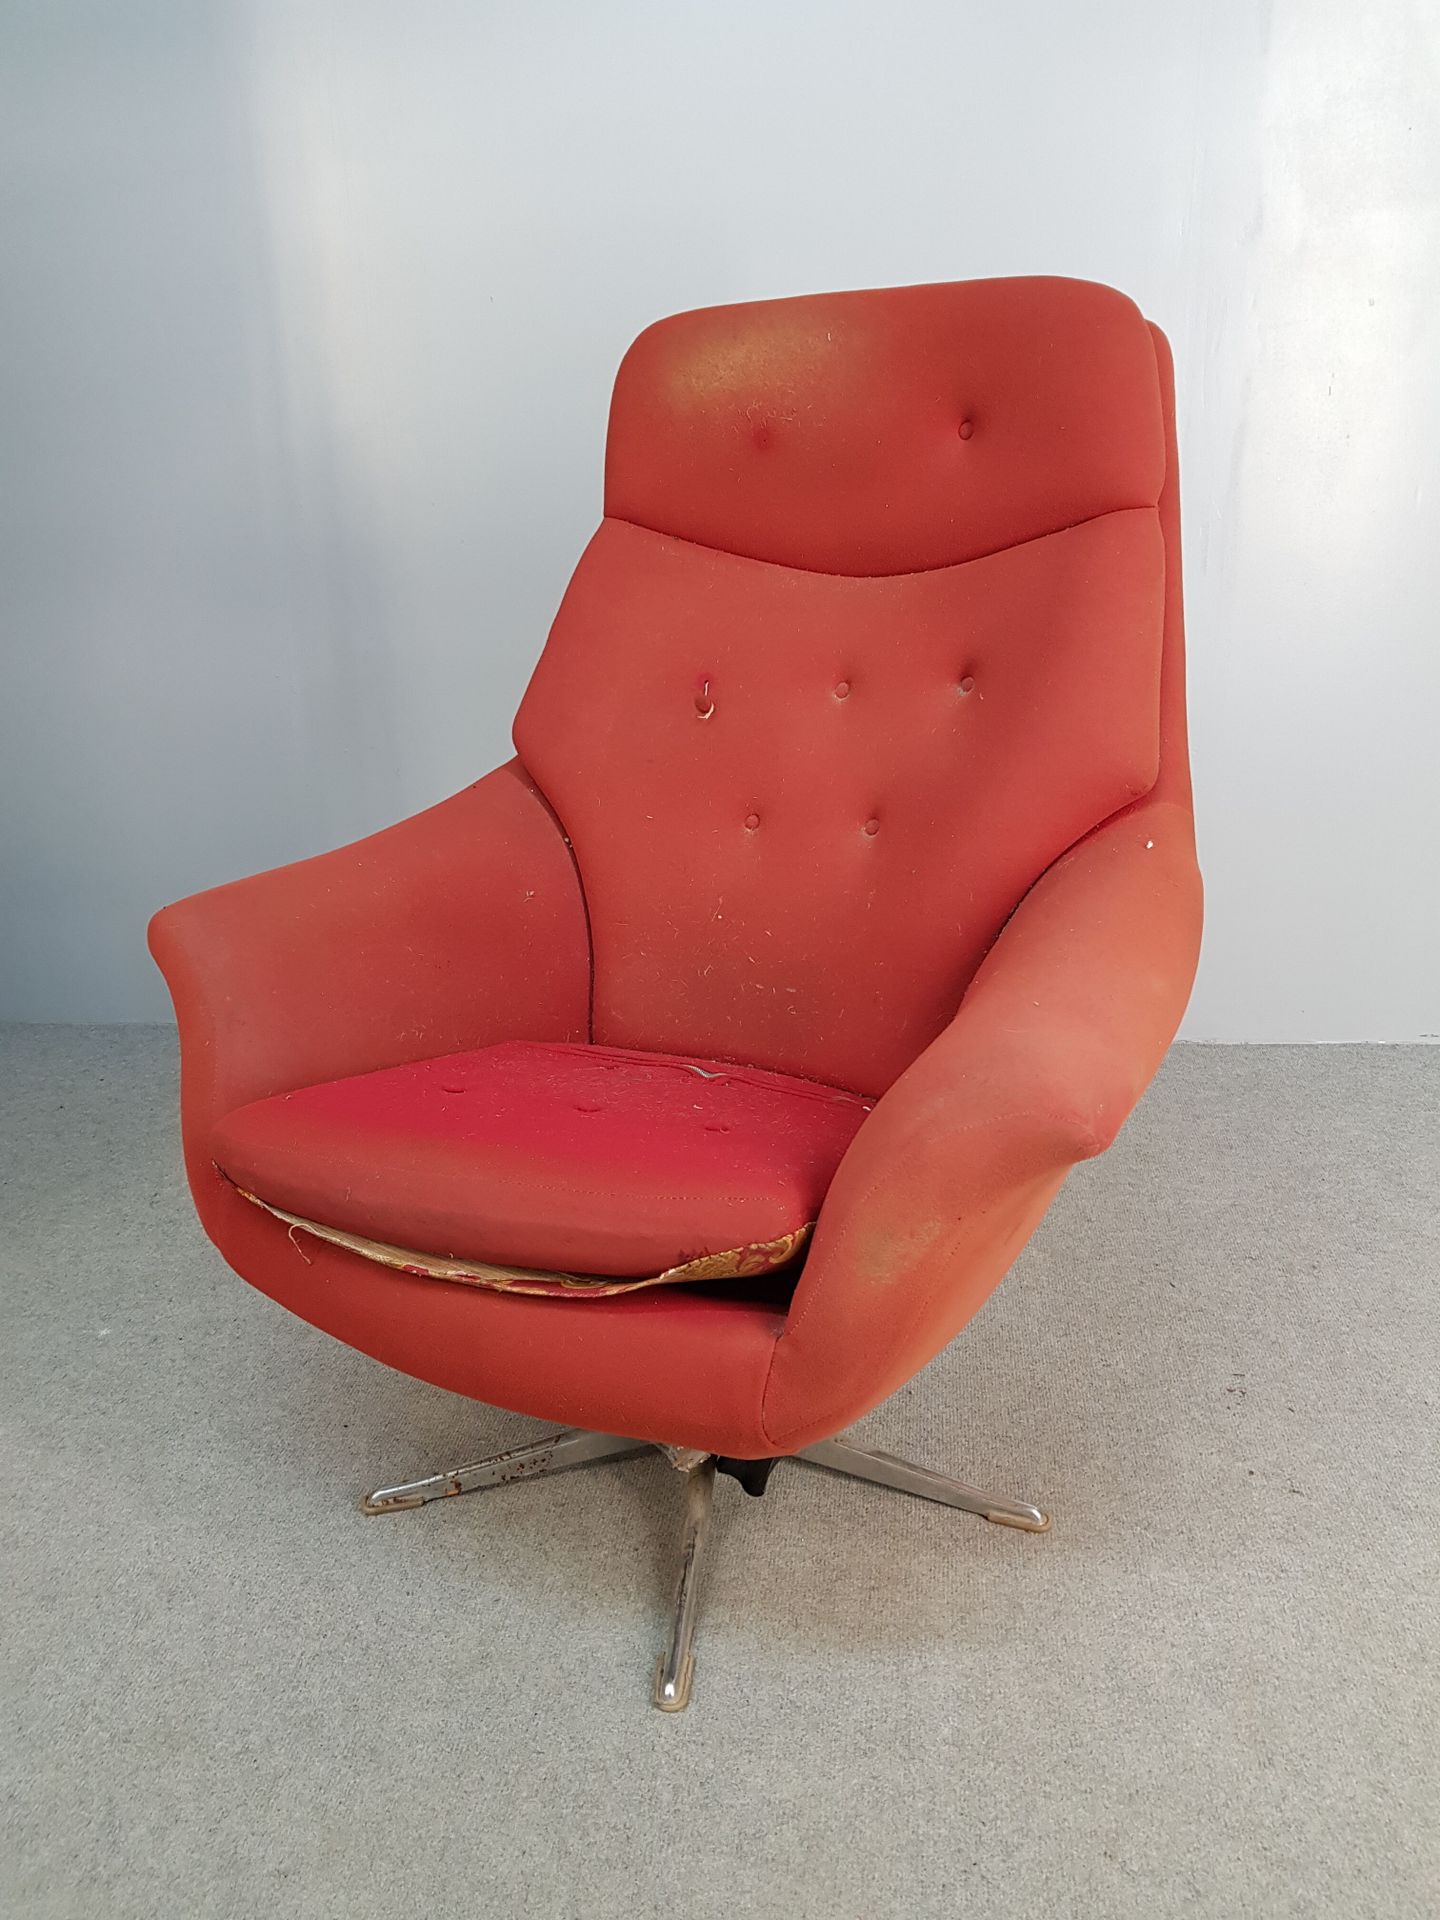 Null Vintage-SESSEL mit orangerotem Stoffbezug, verchromter Fuß.

H 104 x B 78 x&hellip;